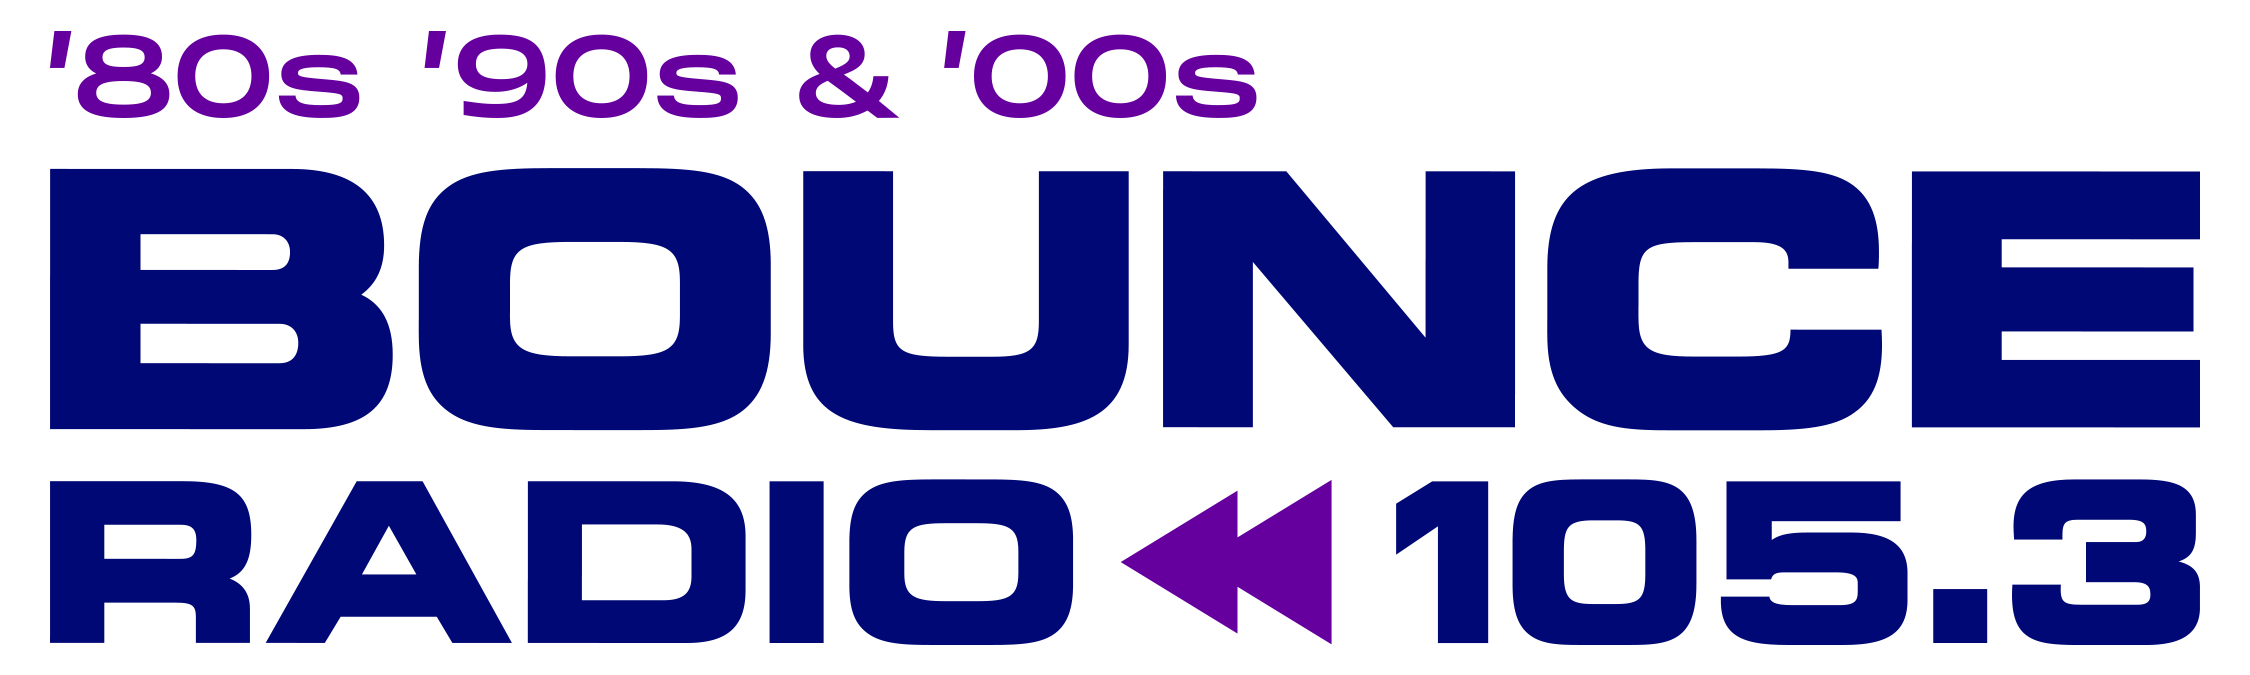 Bounce 105.3 logo